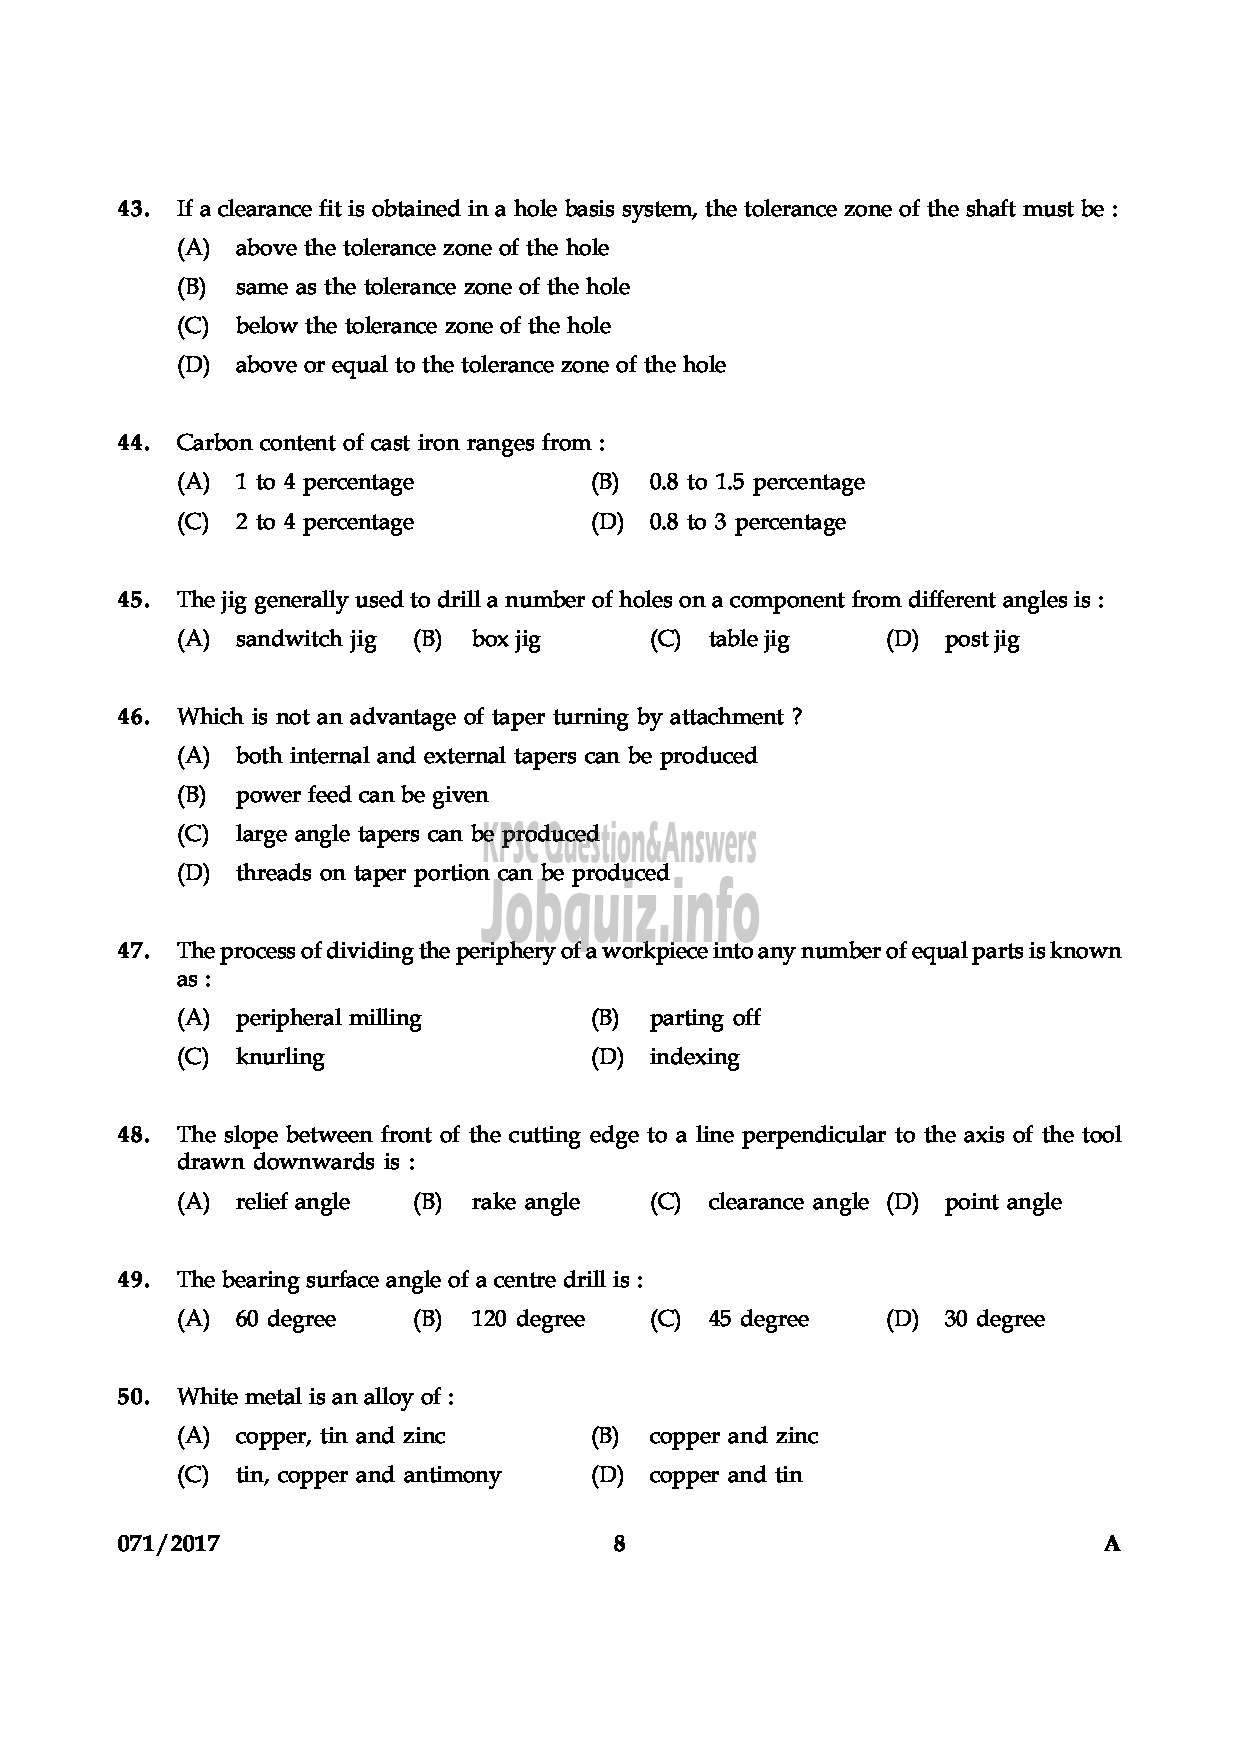 Kerala PSC Question Paper - MECHANICAL OPERATOR PHARMACEUTICAL CORPORATION IM KERALA LTD QUESTION PAPER QUESTION PAPER-7